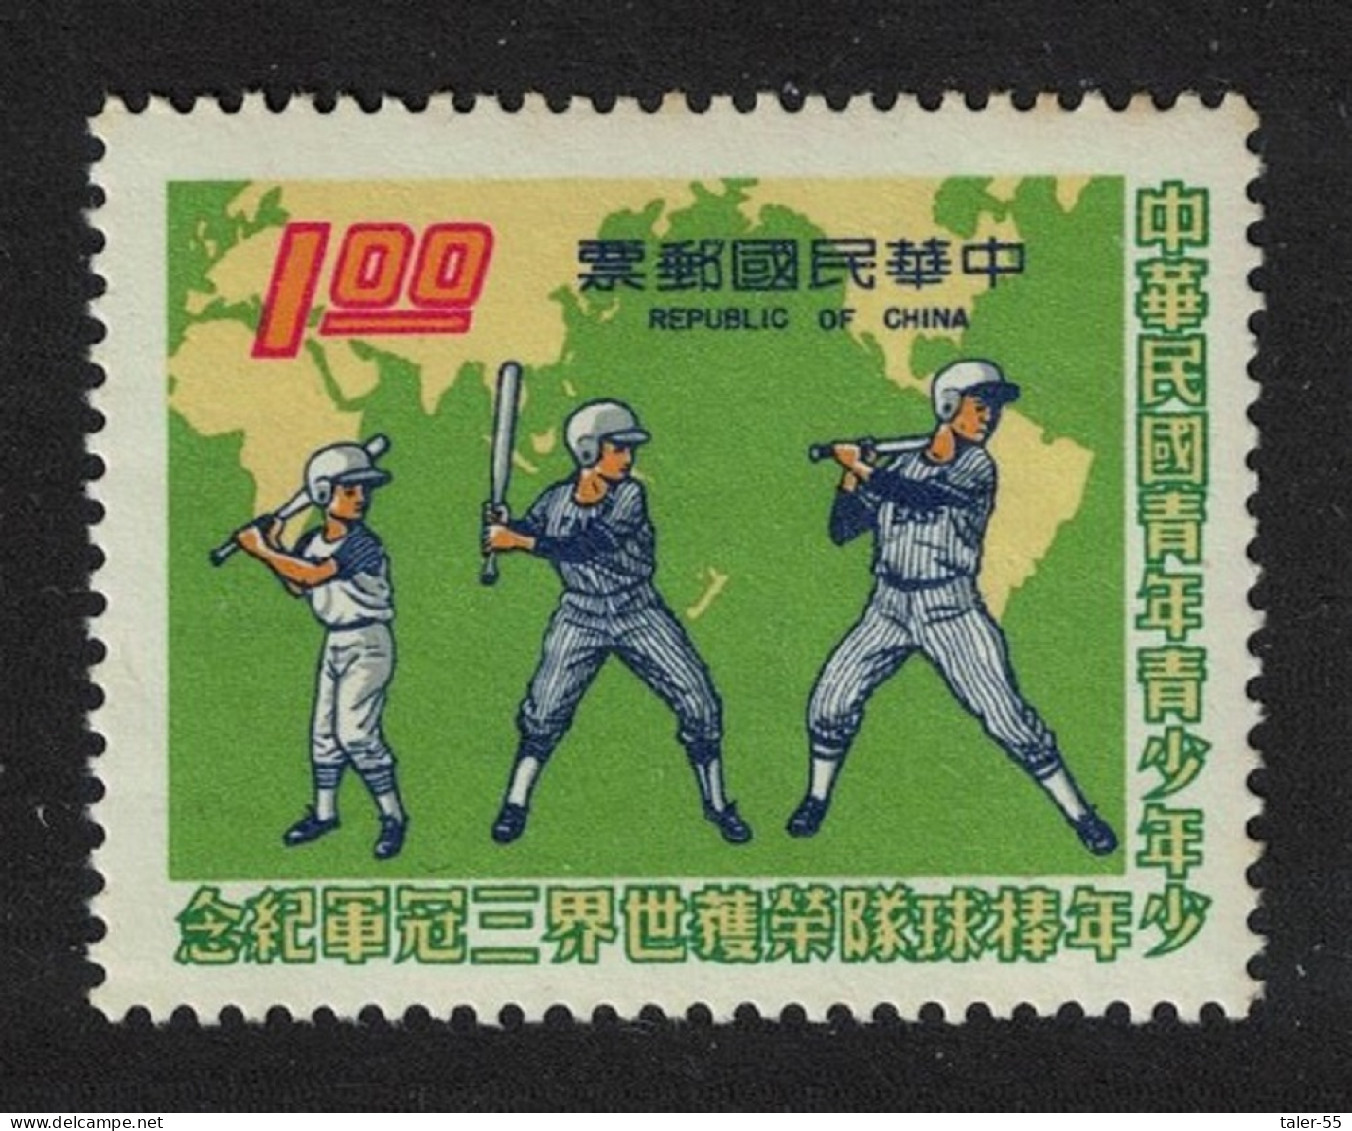 Taiwan Baseball Series USA 1974 MNH SG#1033 - Ongebruikt